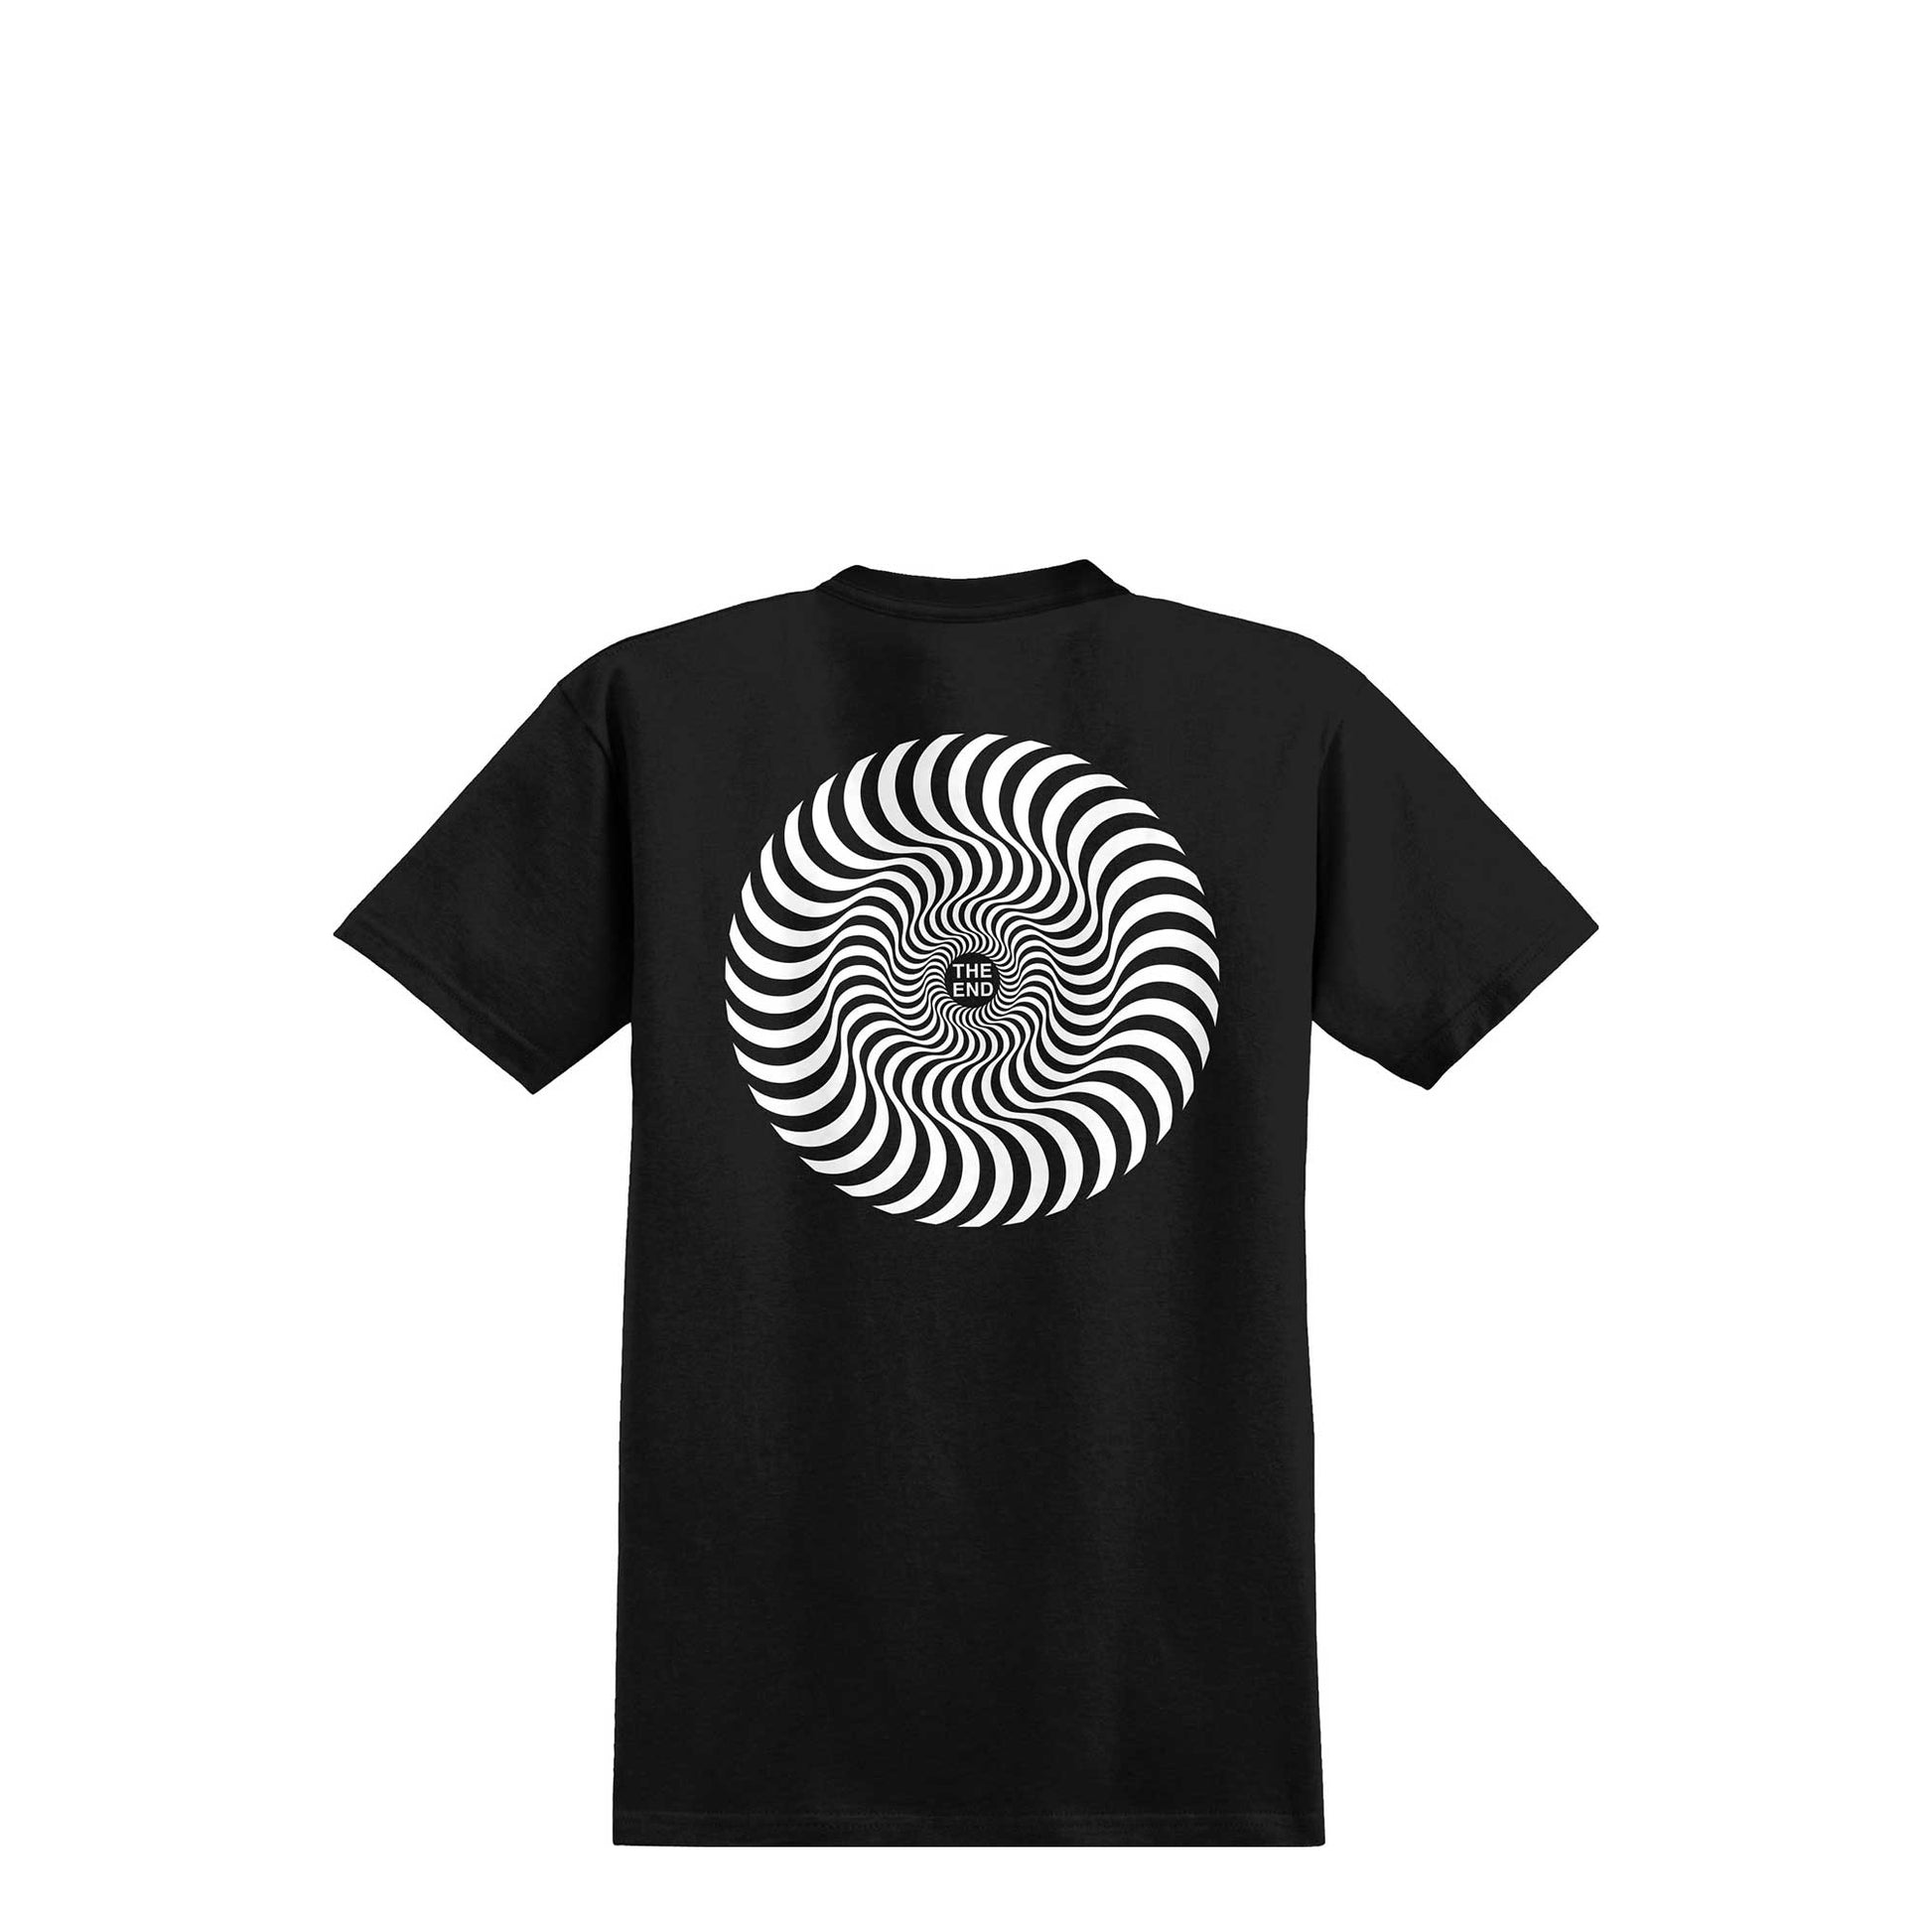 Spitfire Classic Swirl T-Shirt, black w/ white prints - Tiki Room Skateboards - 1